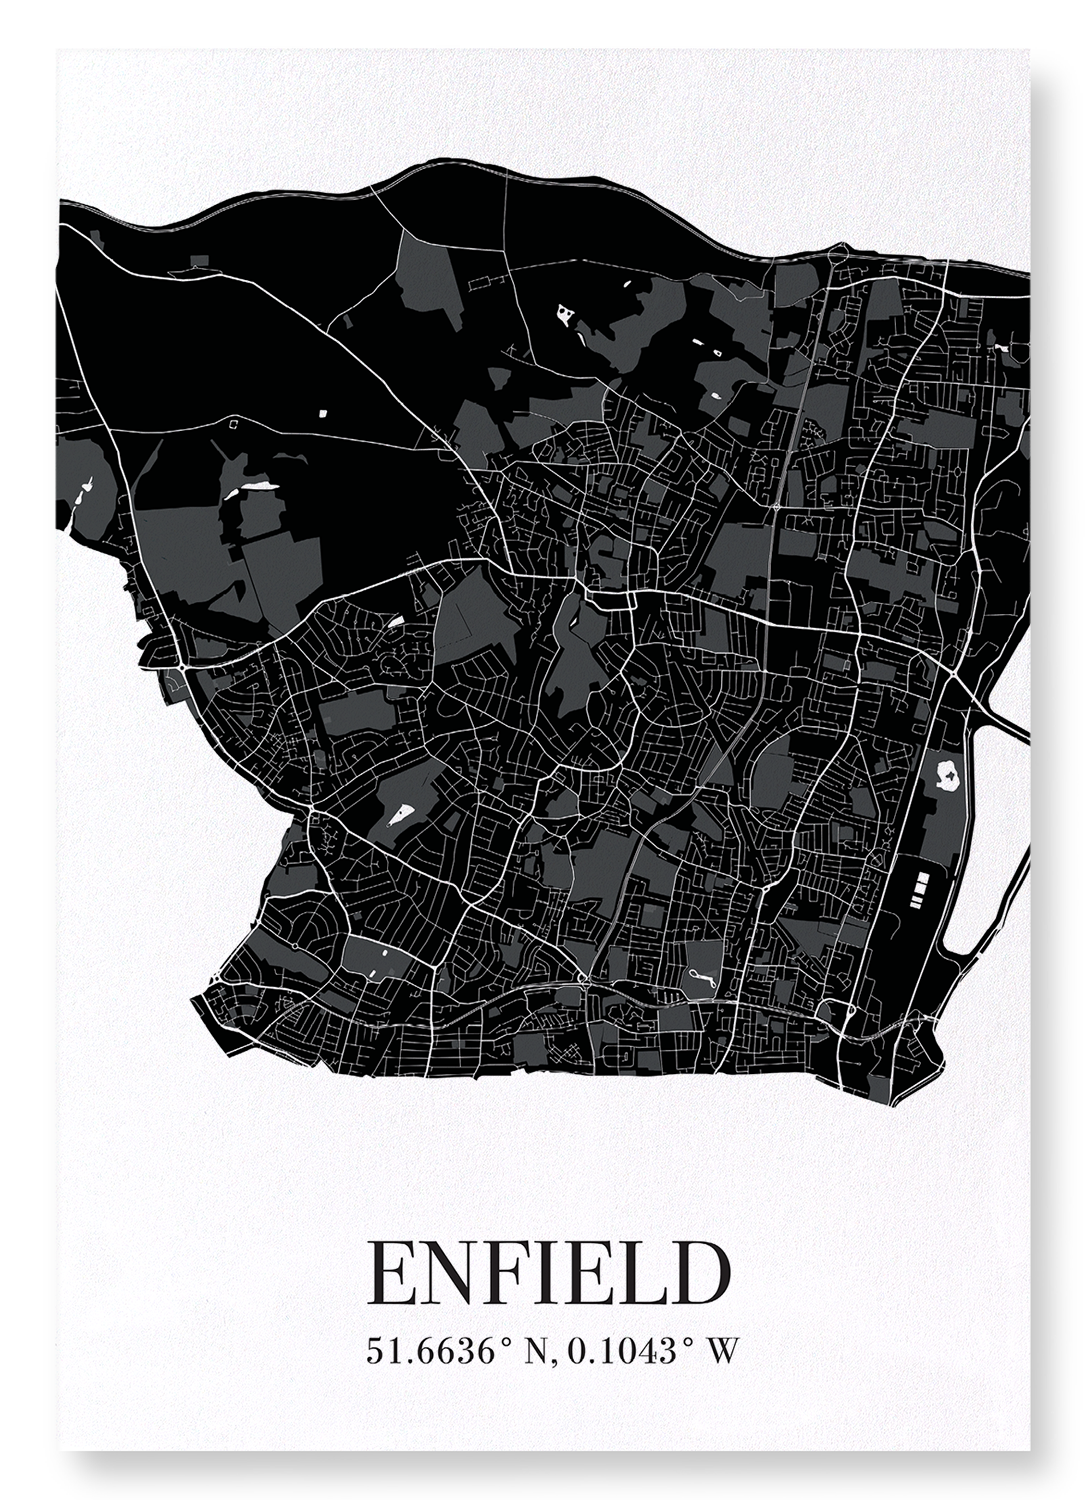 ENFIELD CUTOUT: Map Cutout Art Print